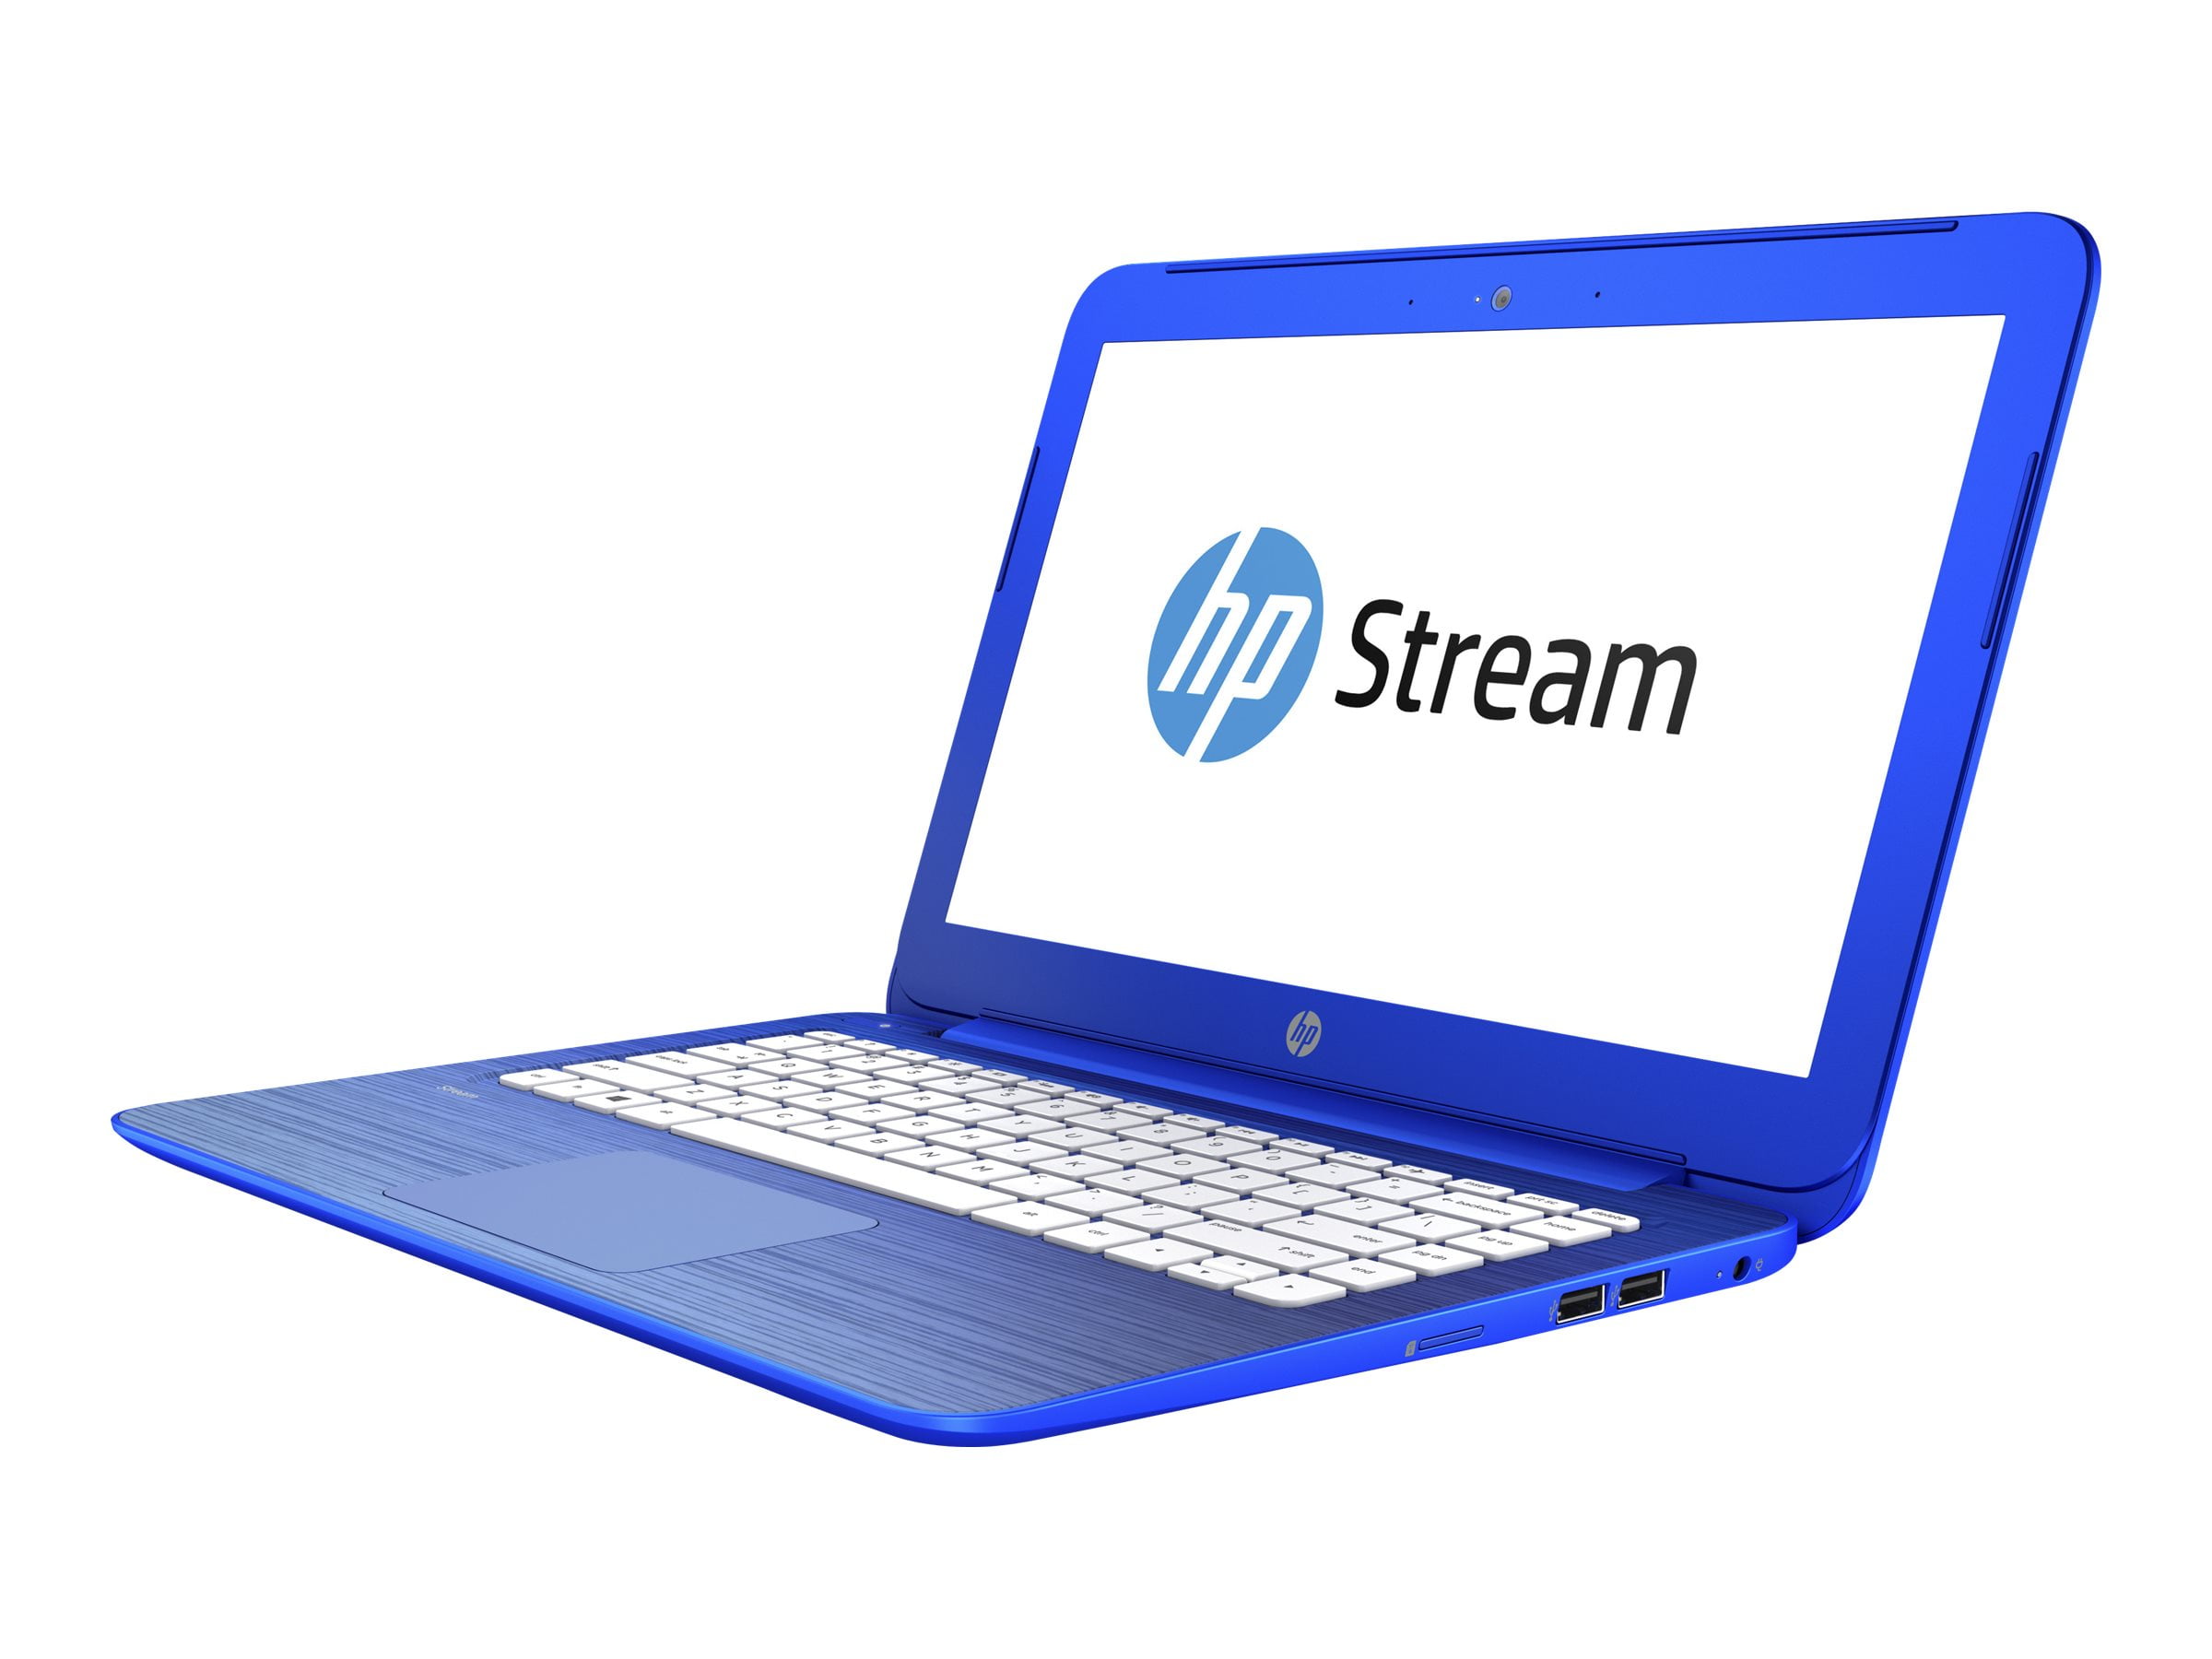 venijn Ruim krant HP Stream Laptop 13-c140nr - Intel Celeron N3050 / 1.6 GHz - Win 10 Home  64-bit - HD Graphics - 2 GB RAM - 32 GB eMMC - 13.3" touchscreen 1366 x